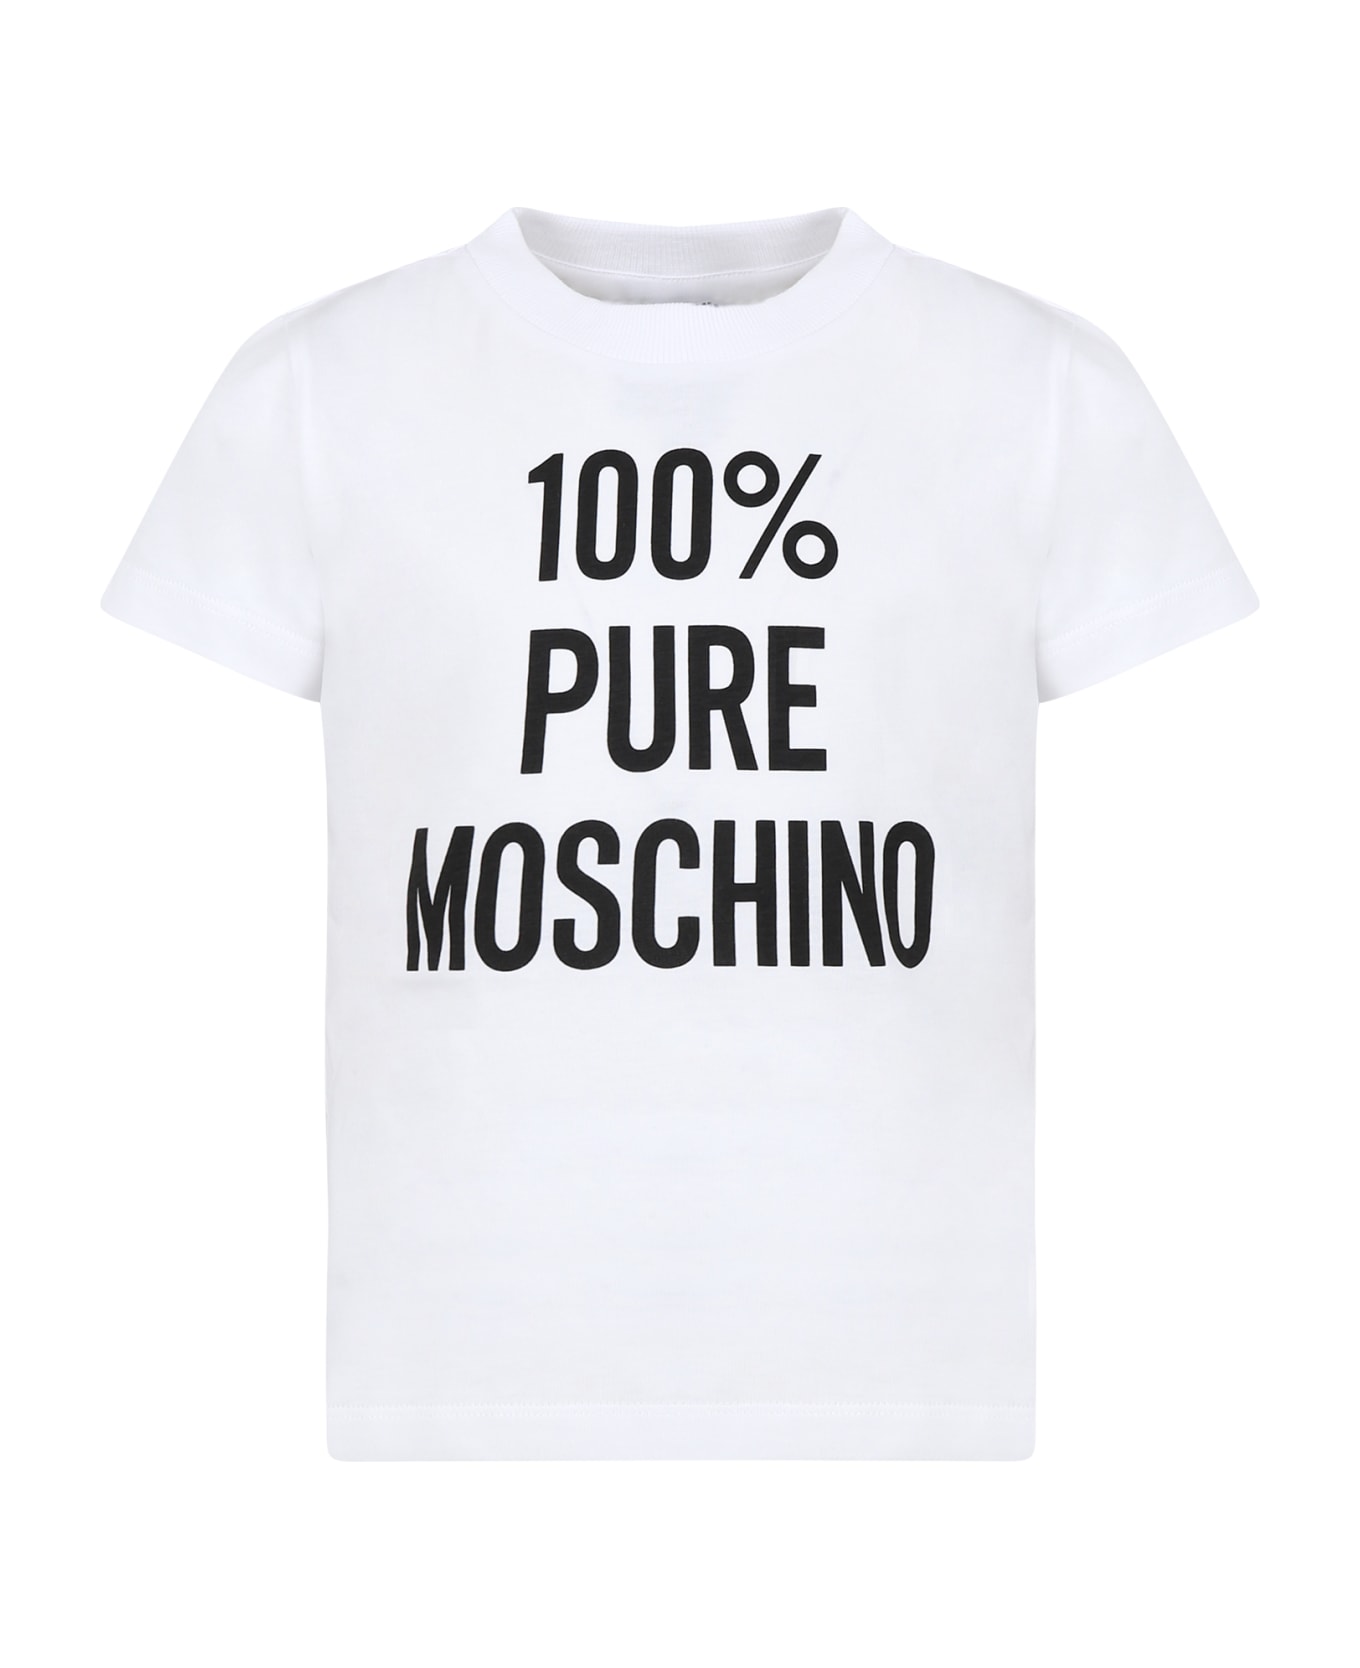 Moschino White T-shirt For Kids With Black Print - Bianco